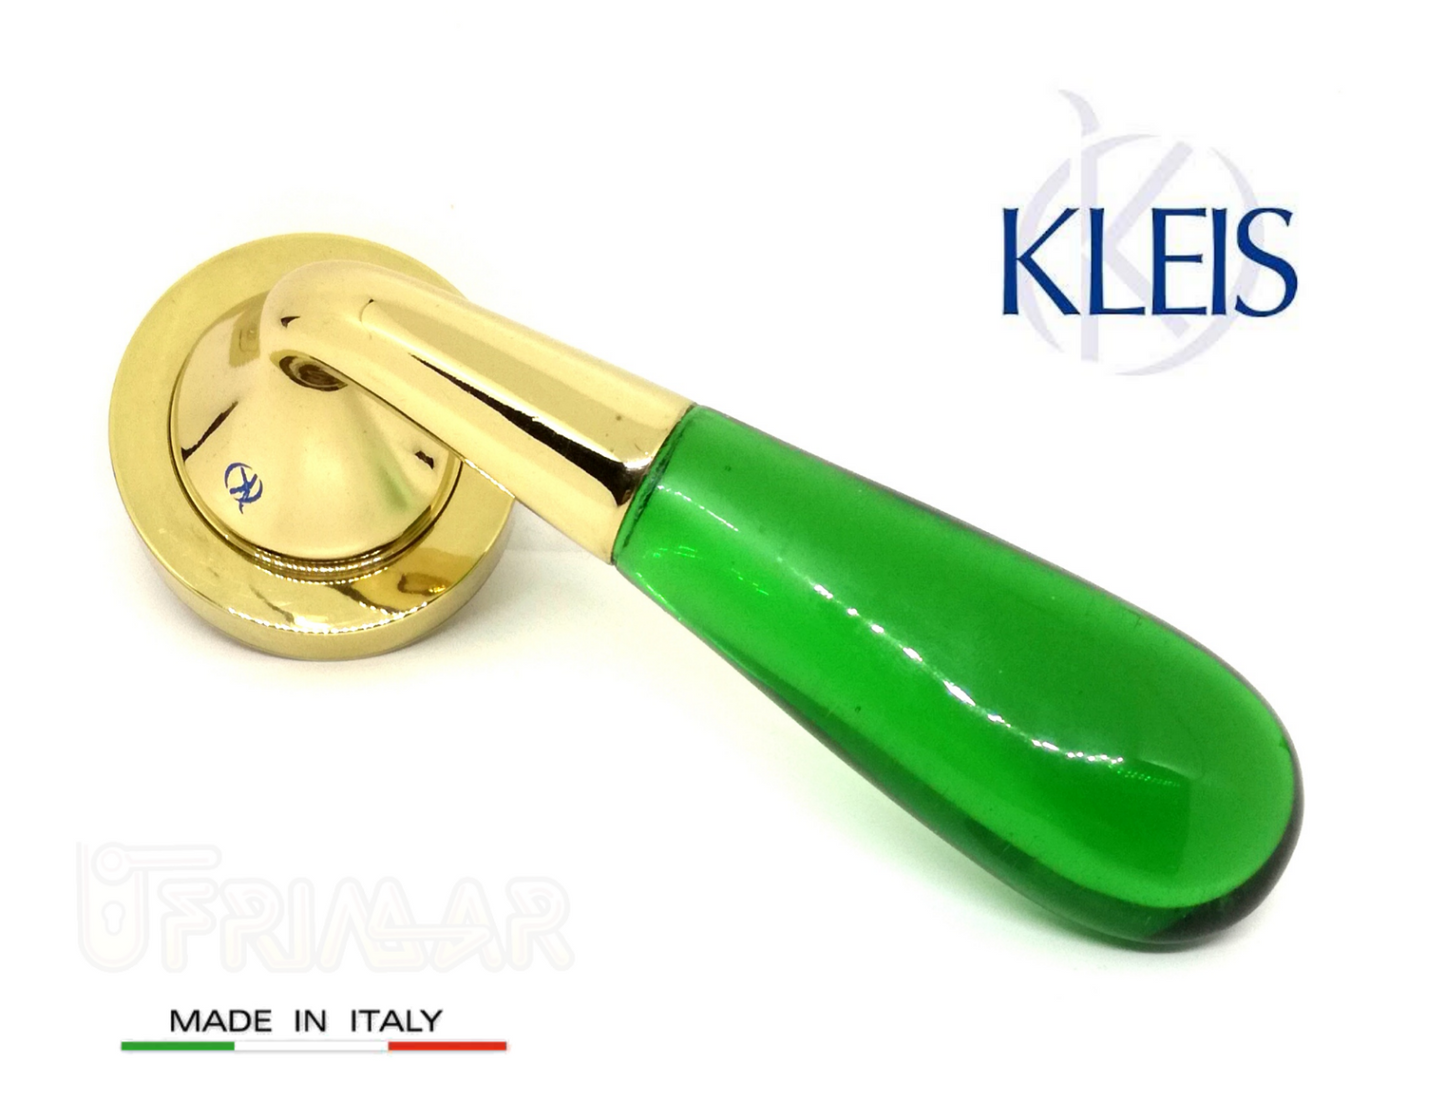 Maniglia KLEIS GEMMA art. 0021001 Ottone + Vetro verde maniglie per porte porte